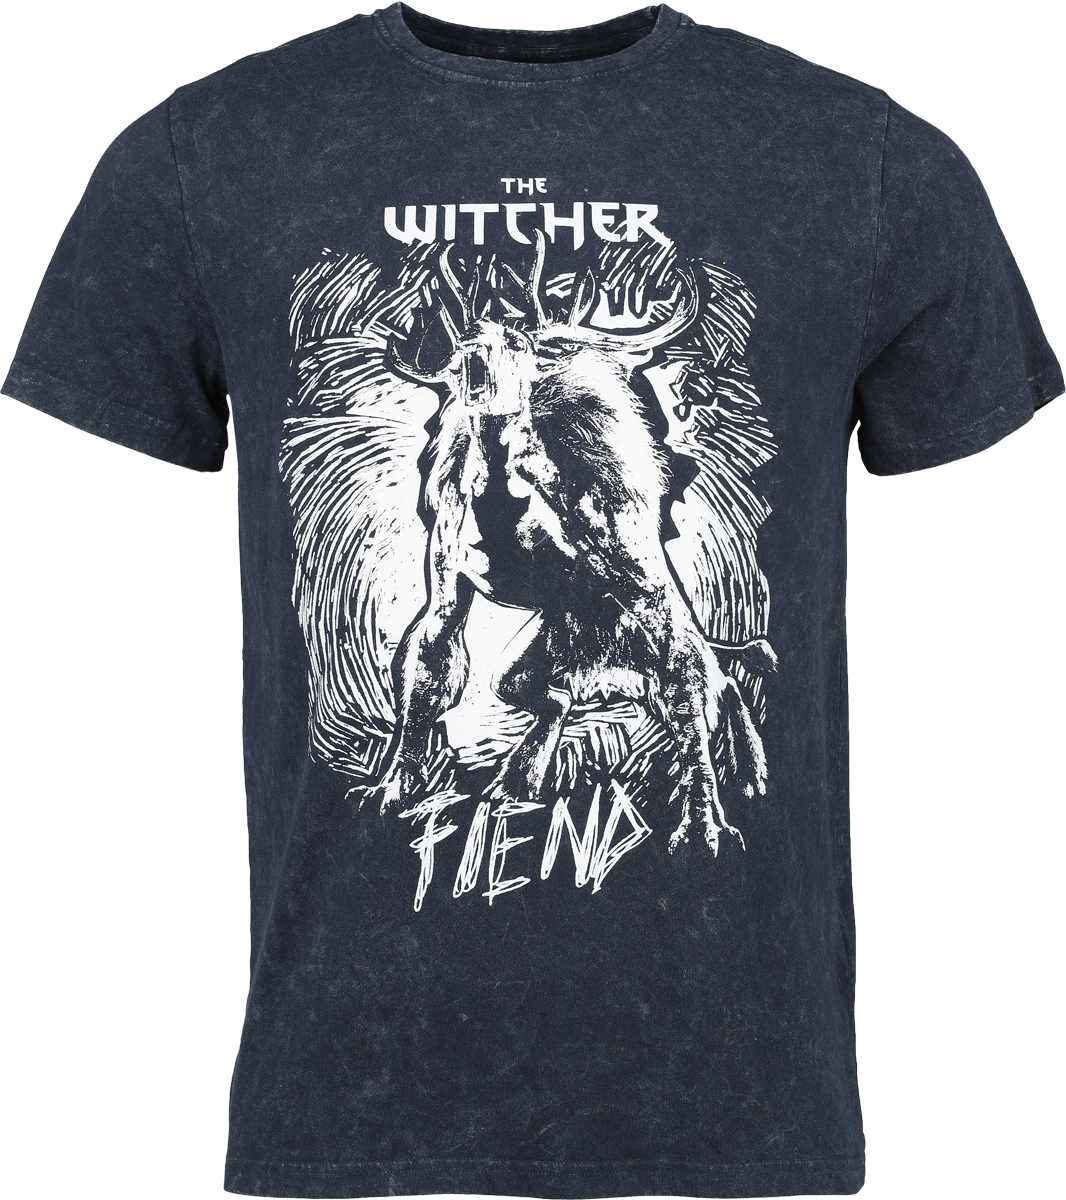 The Witcher - Fiend - T-Shirt - blau